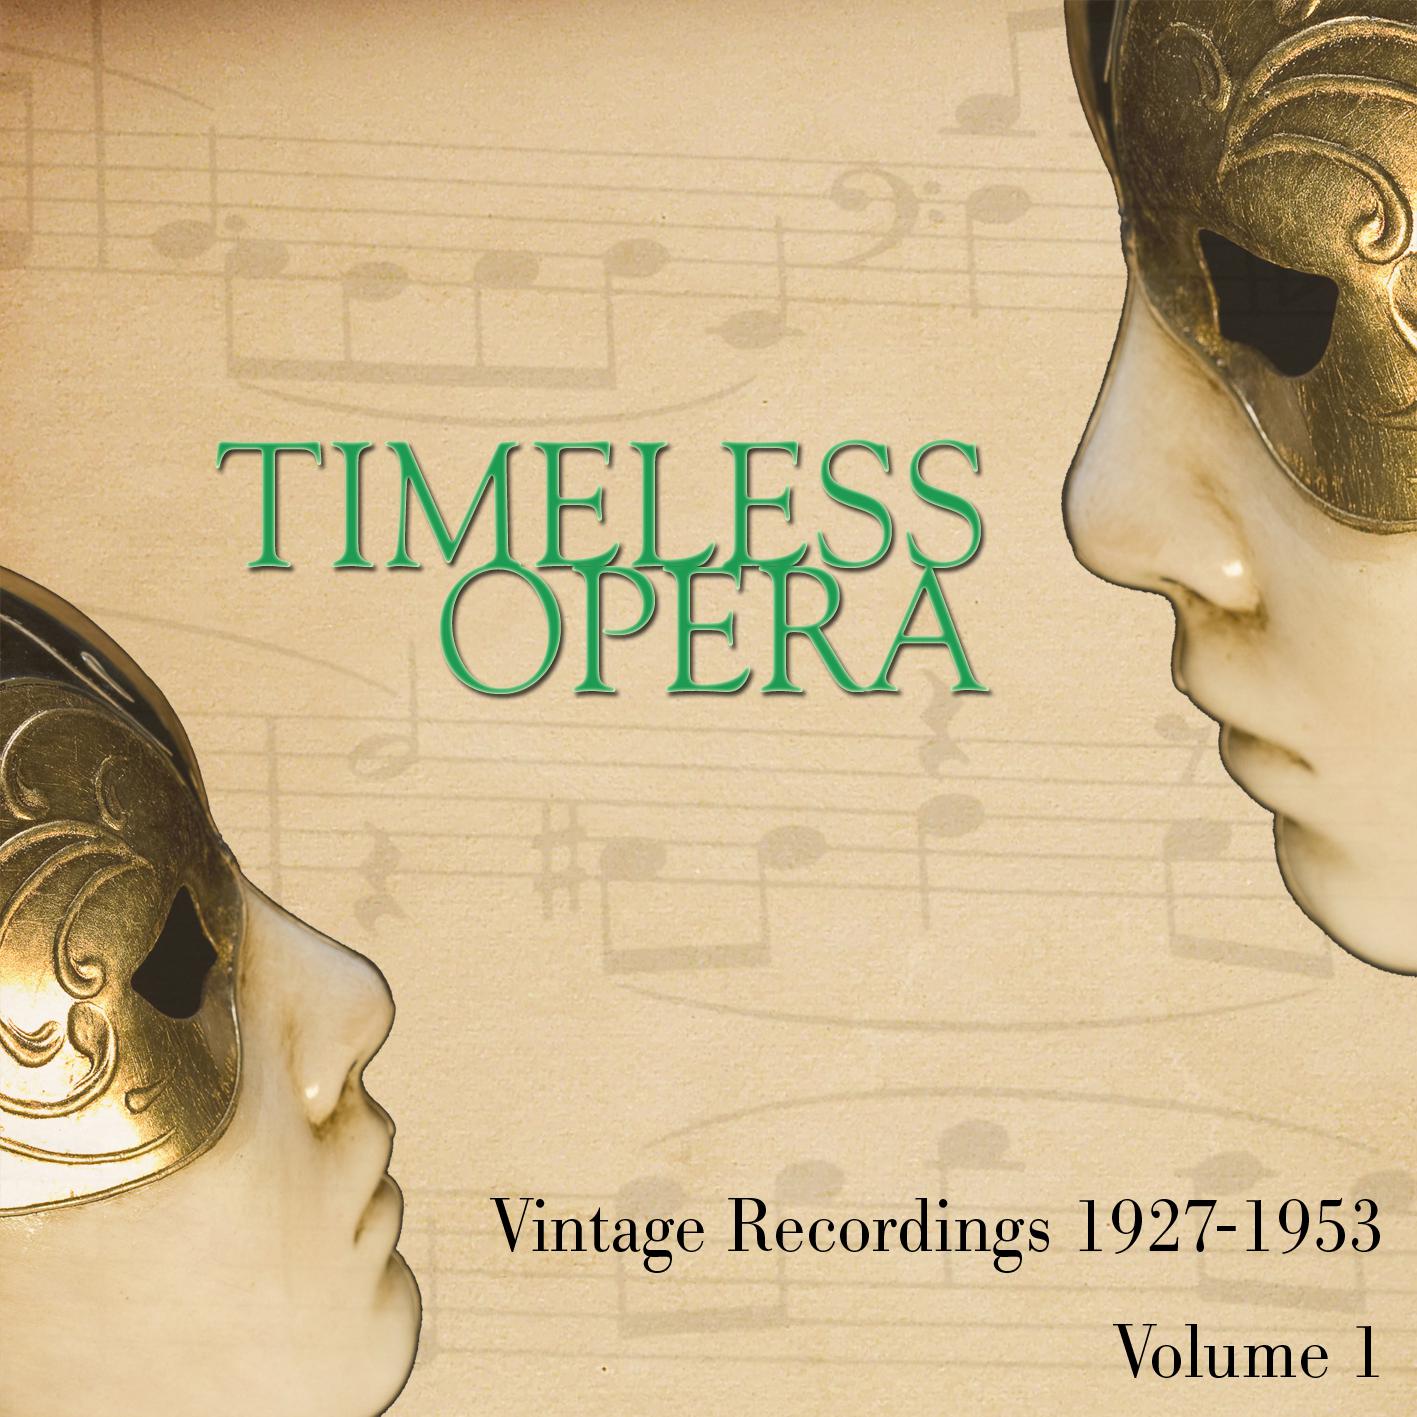 Timeless Opera Vintage Recordings 1927-1953 Vol 1